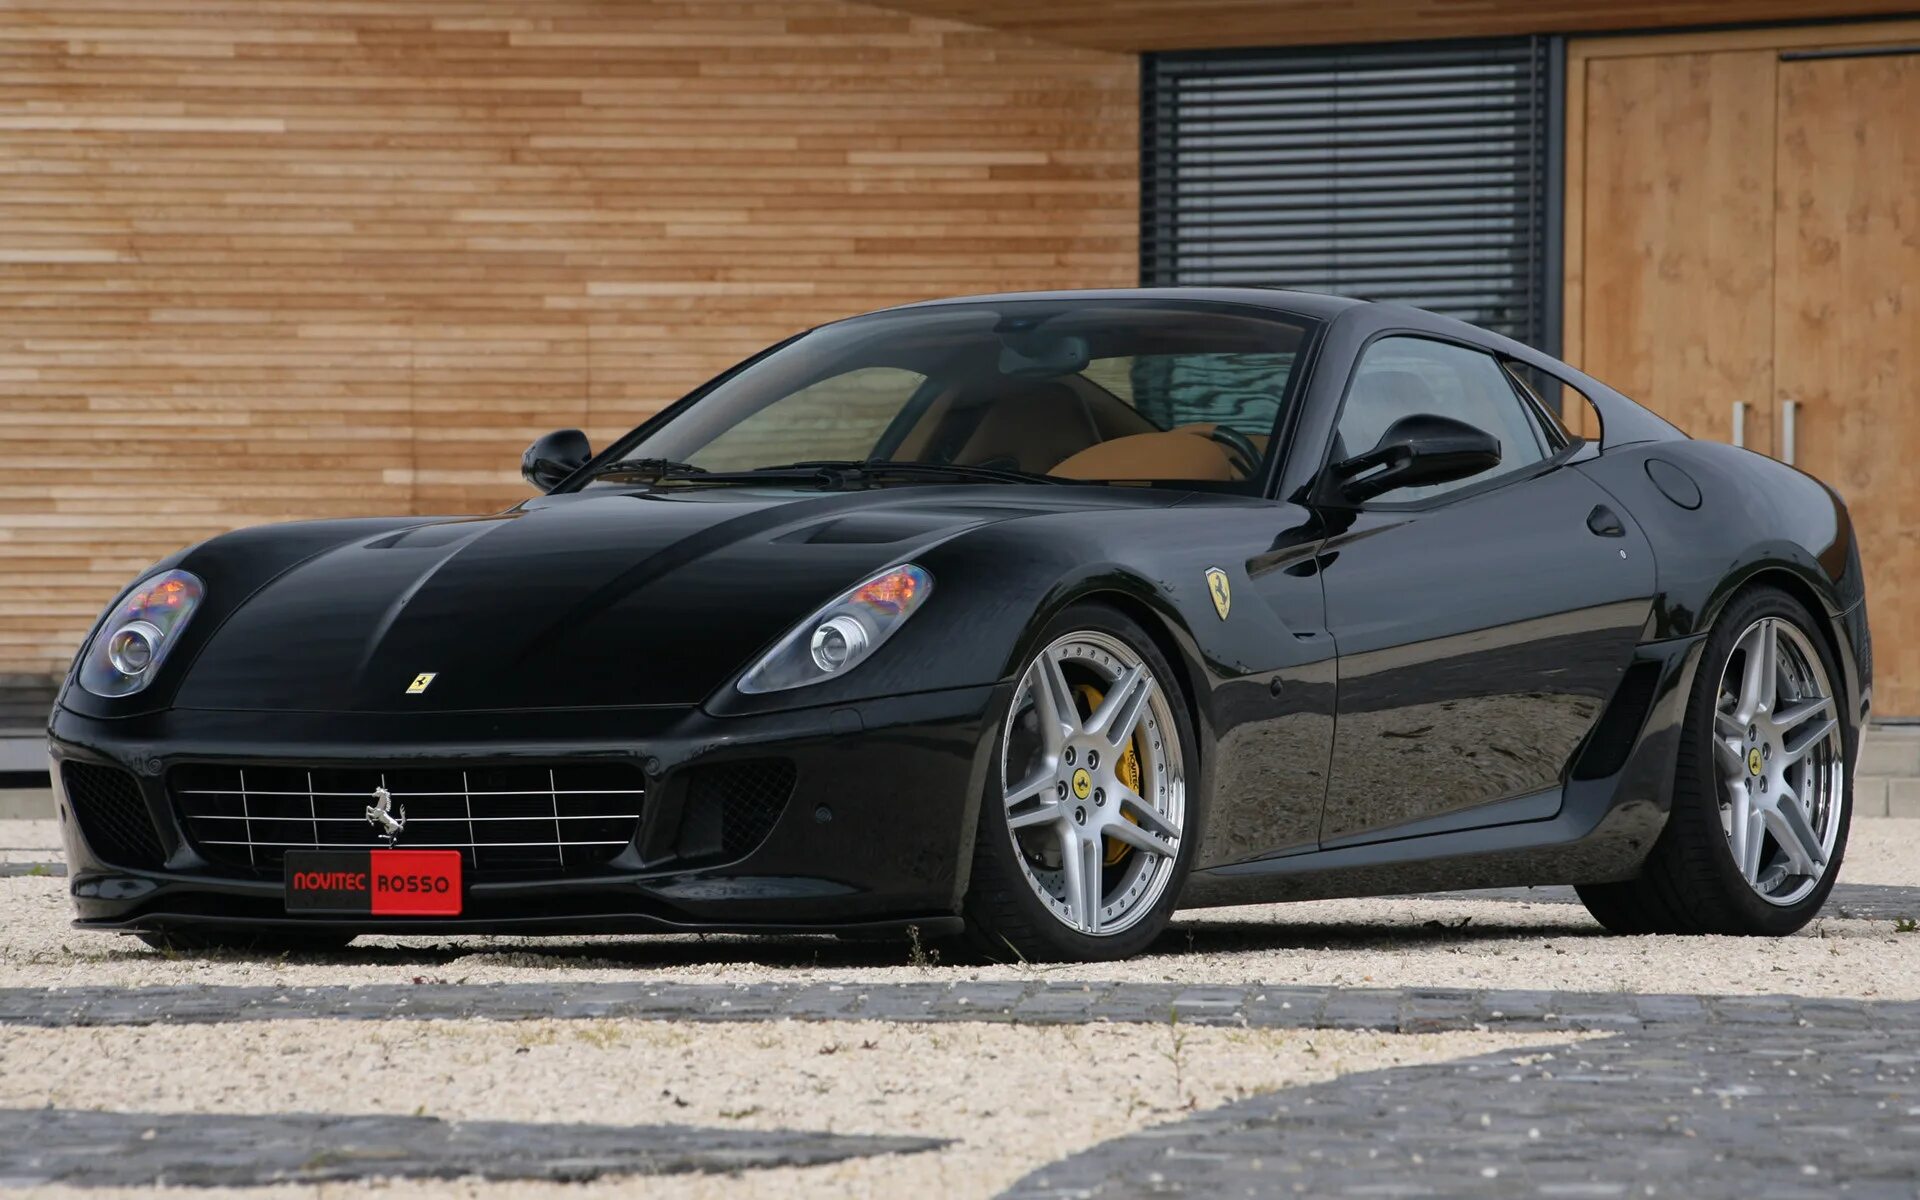 Ferrari fiorano. Феррари 599 GTB. Феррари 599 GTB Fiorano. Ferrari 599 Black. Ferrari 599 GTB Fiorano Black.